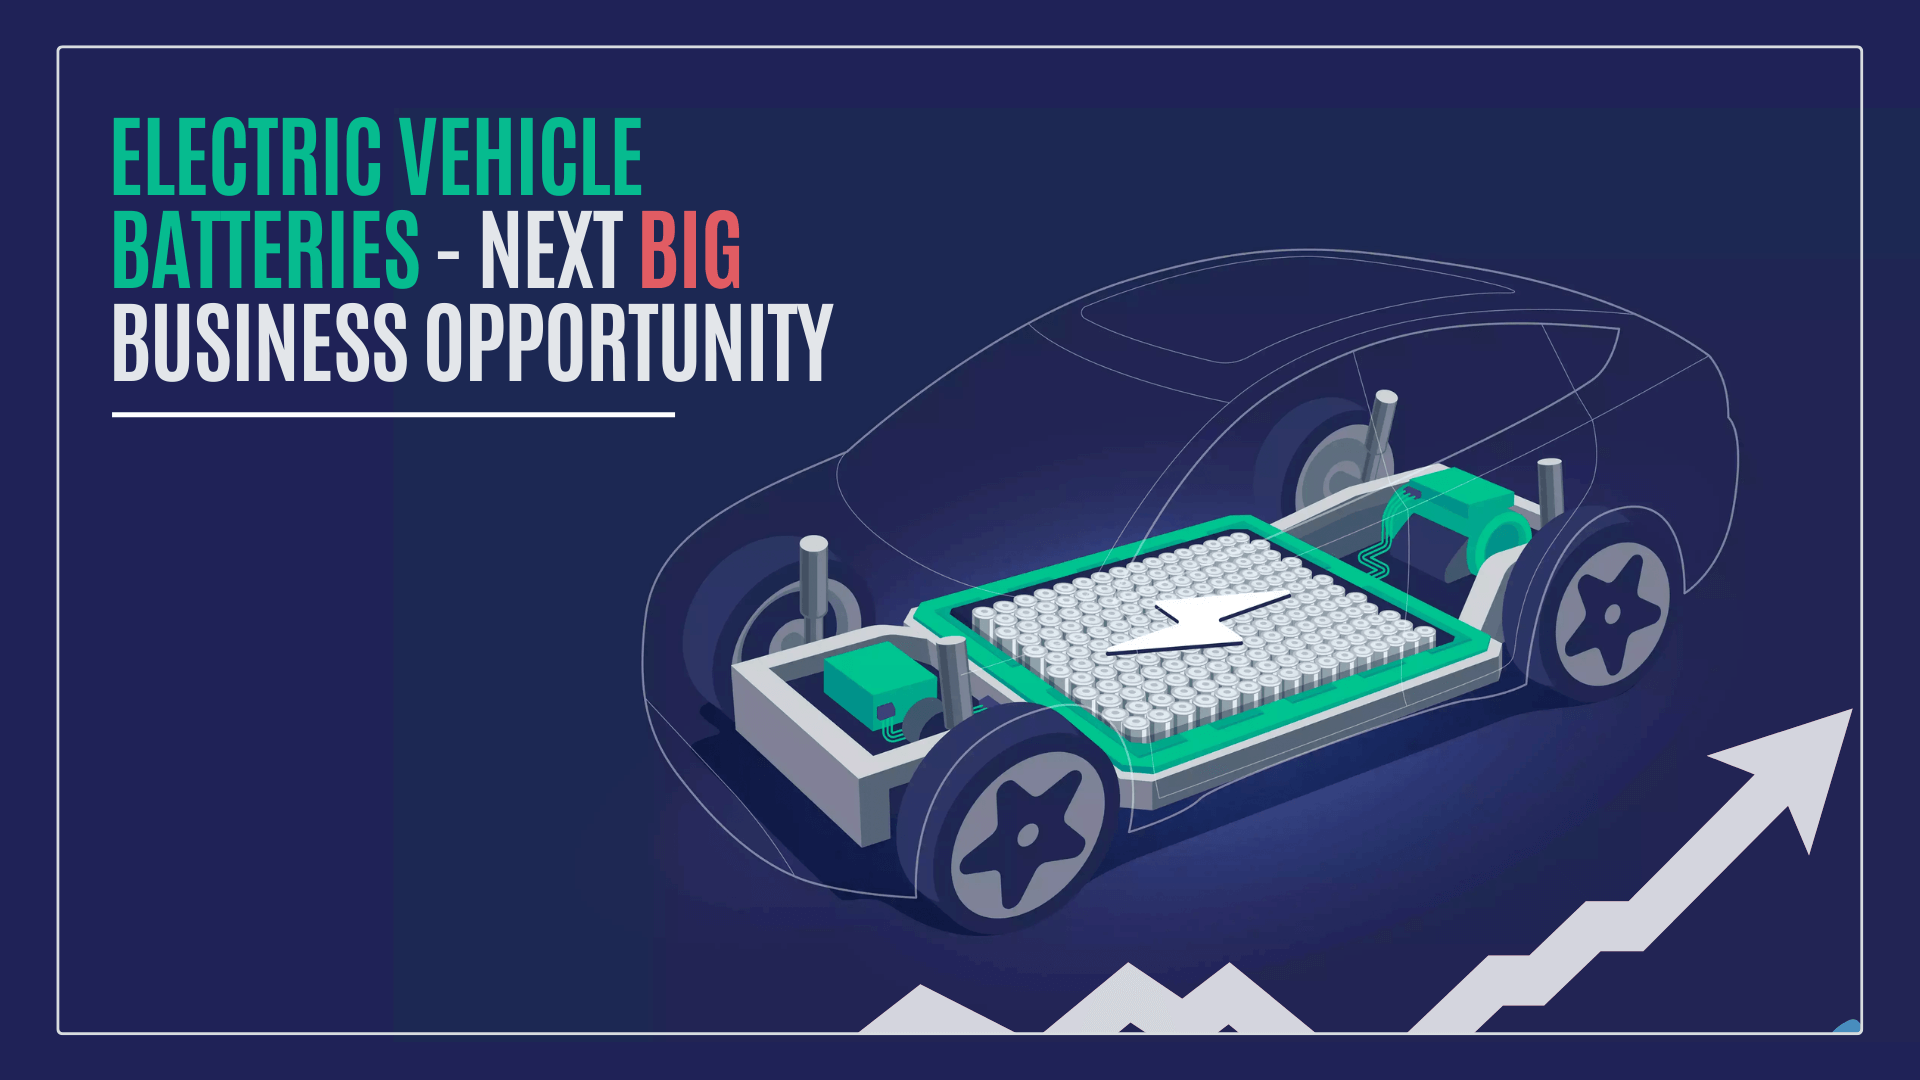 https://e-vehicleinfo.com/electric-vehicle-batteries-next-big-business-opportunity/